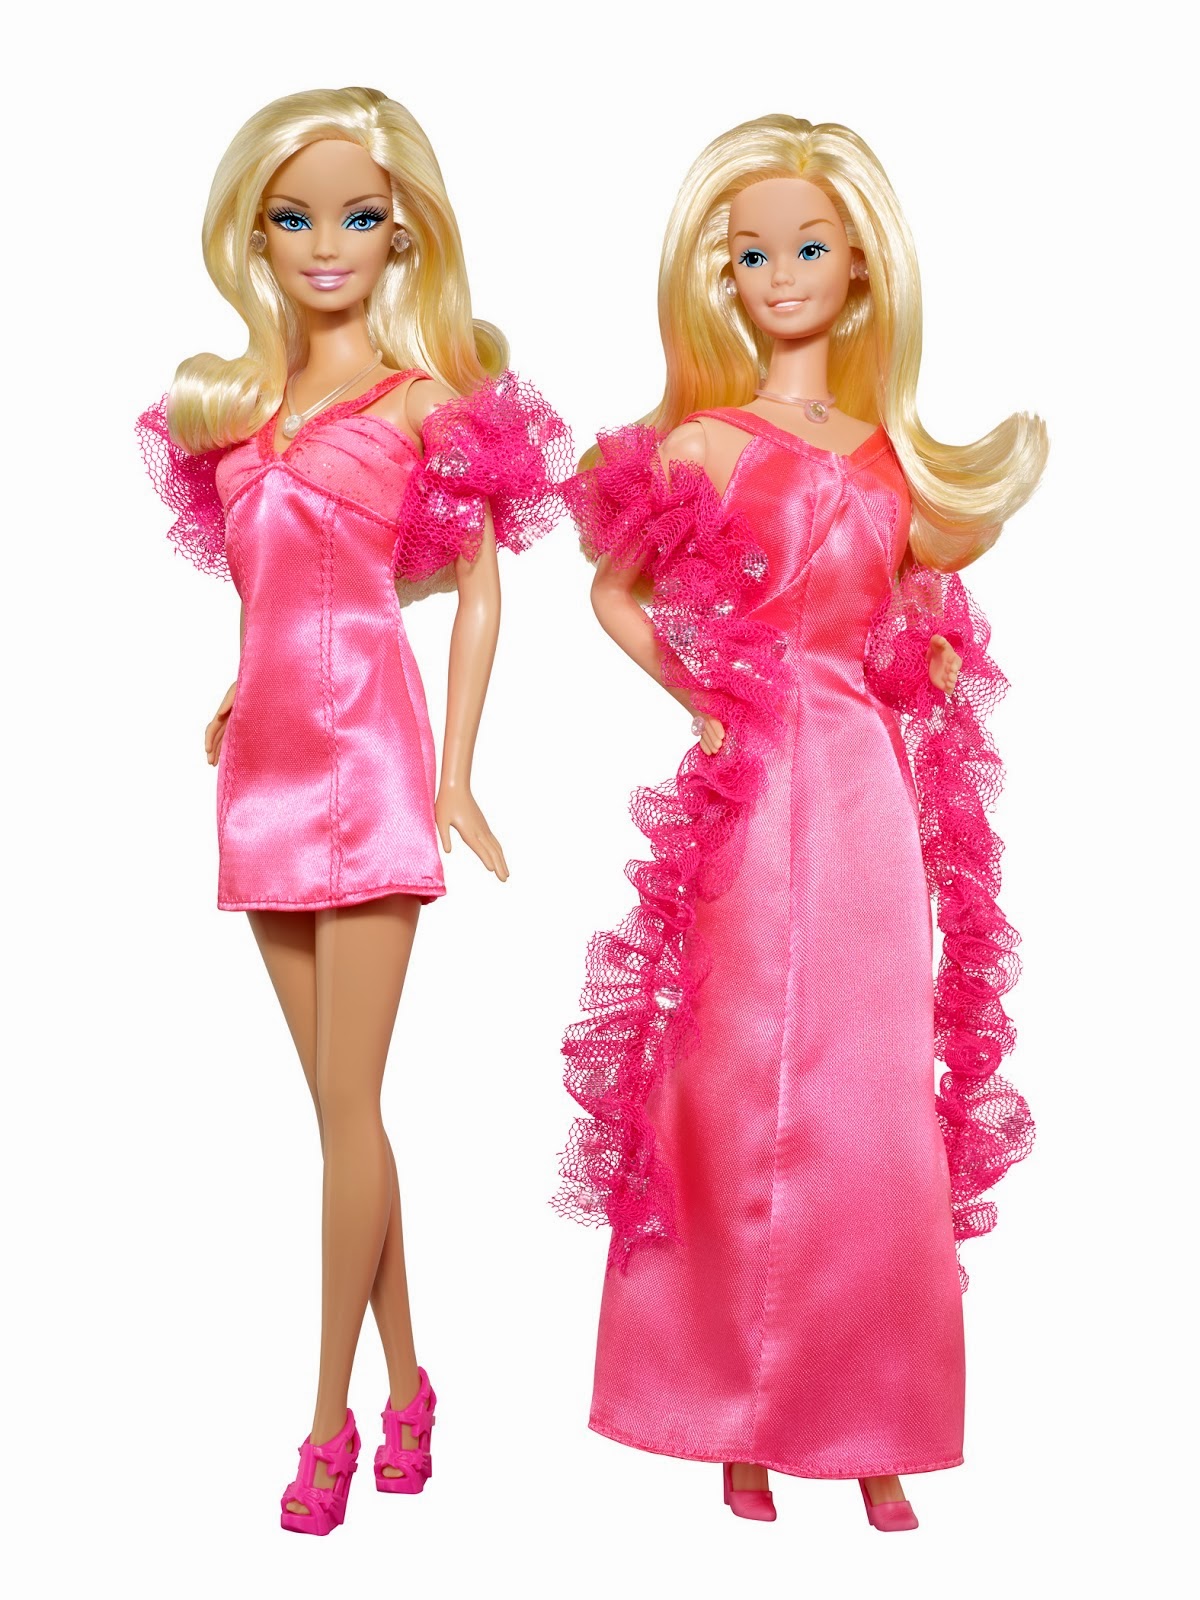 Download Software Kumpulan Gambar Barbie Doll Cantik